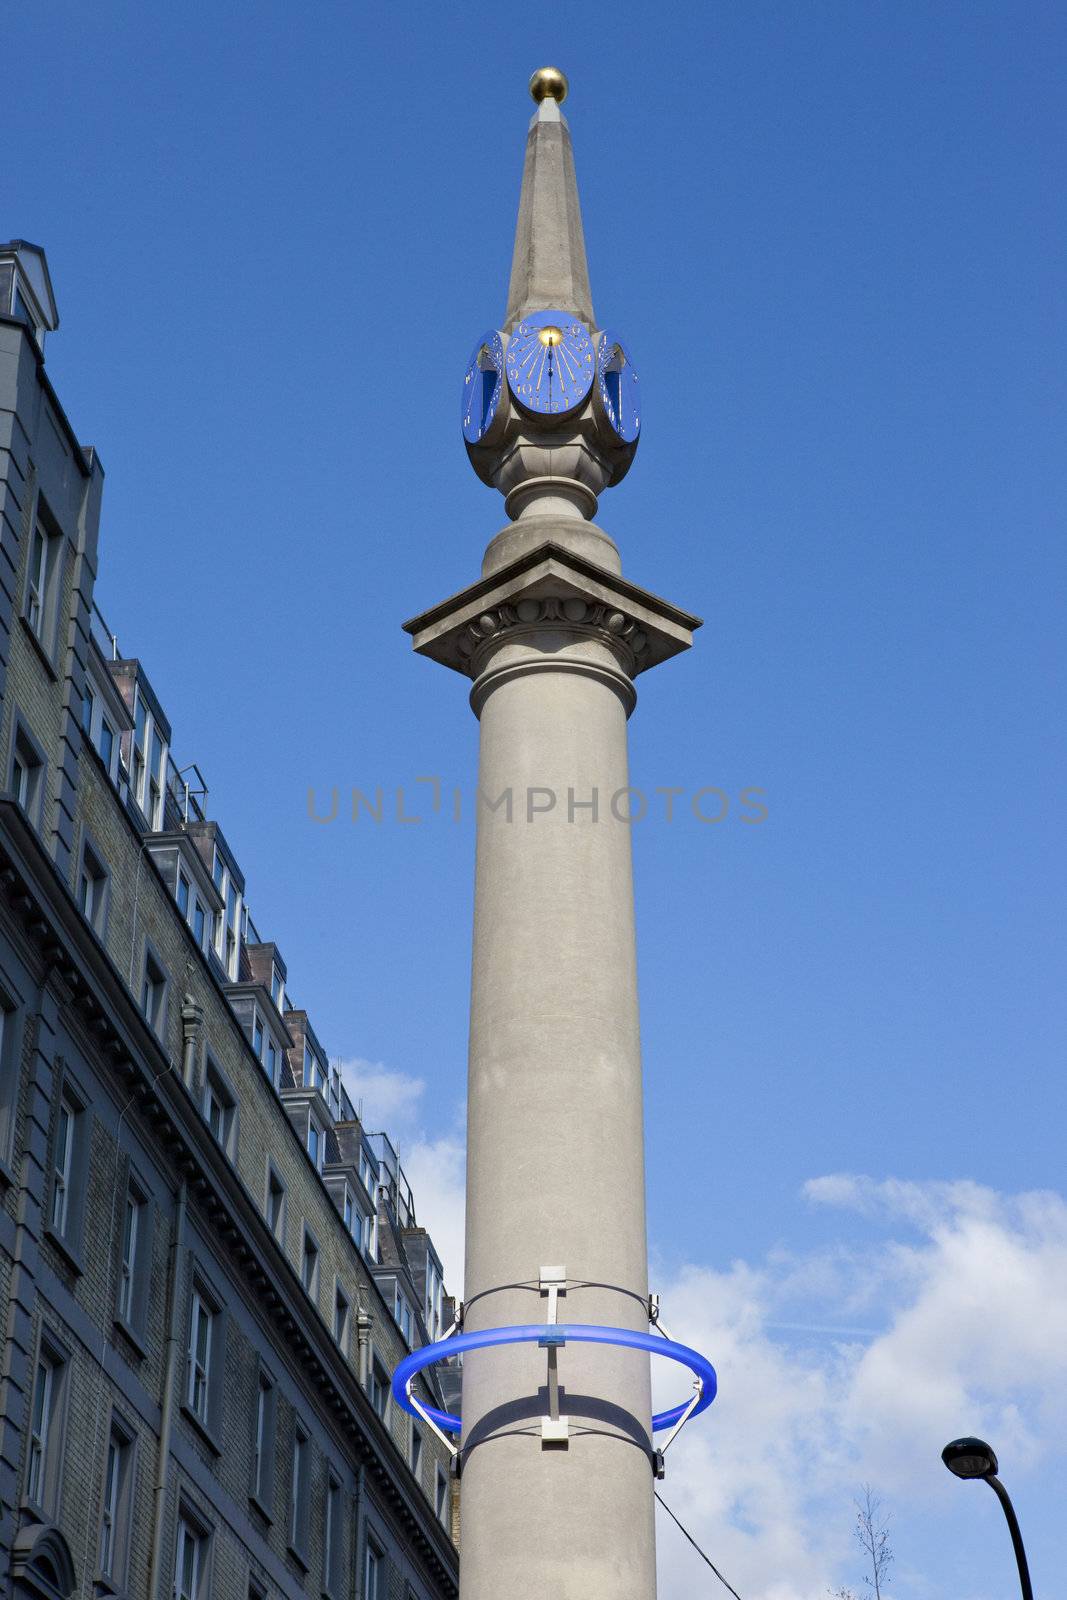 Seven Dials Sundial Pilar in London by chrisdorney